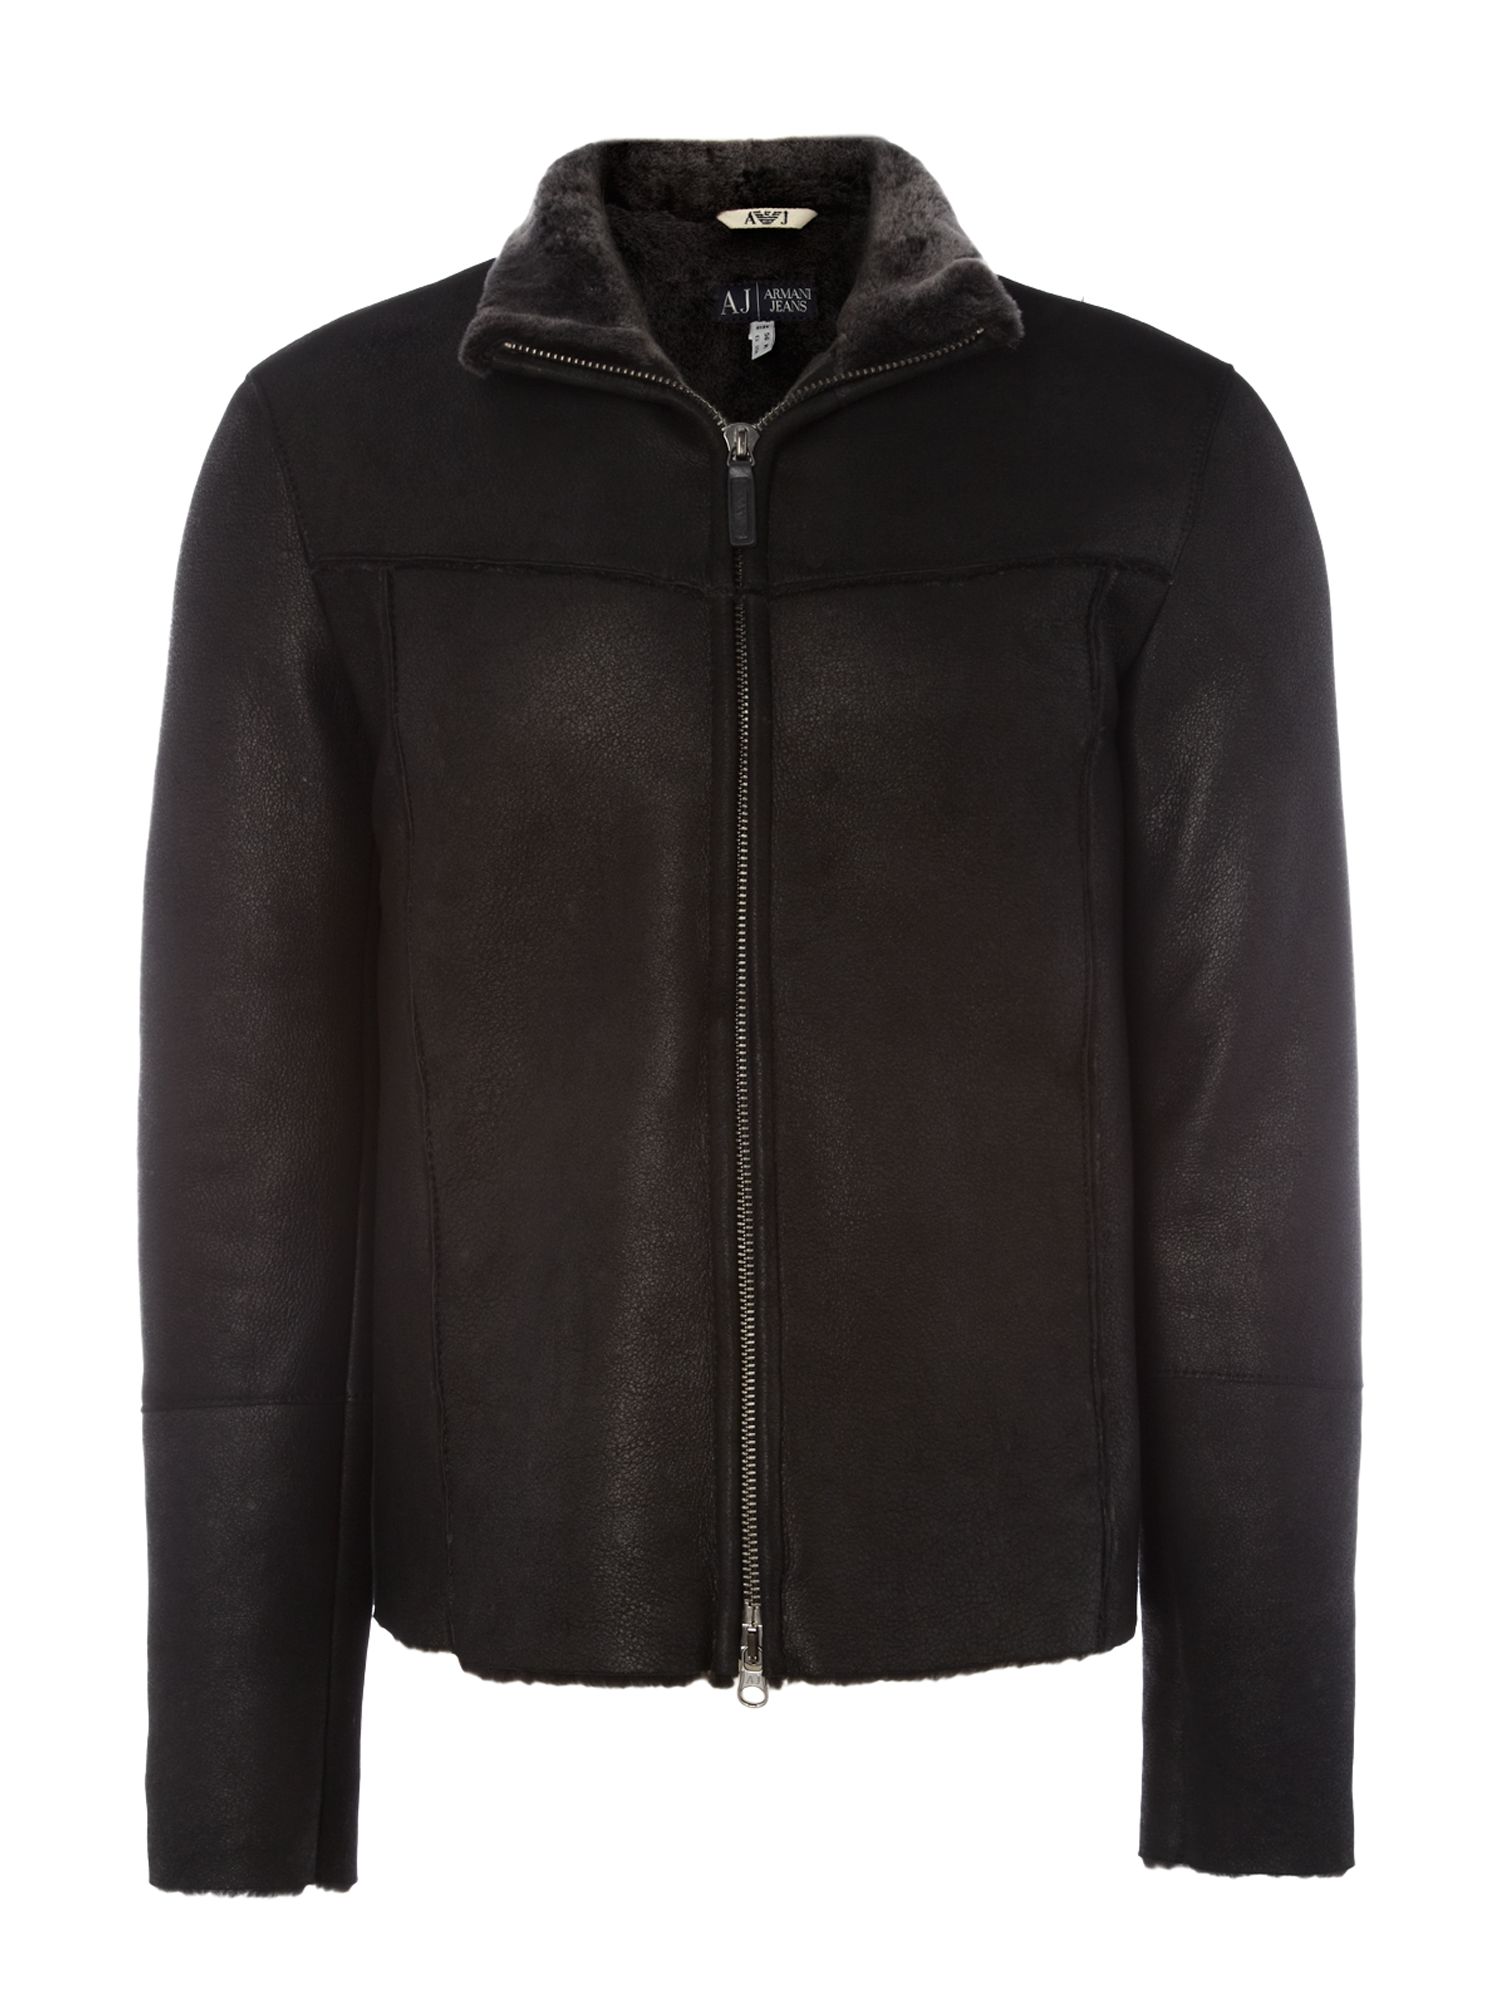 Armani Jeans Shearling Jacket in Black for Men | Lyst